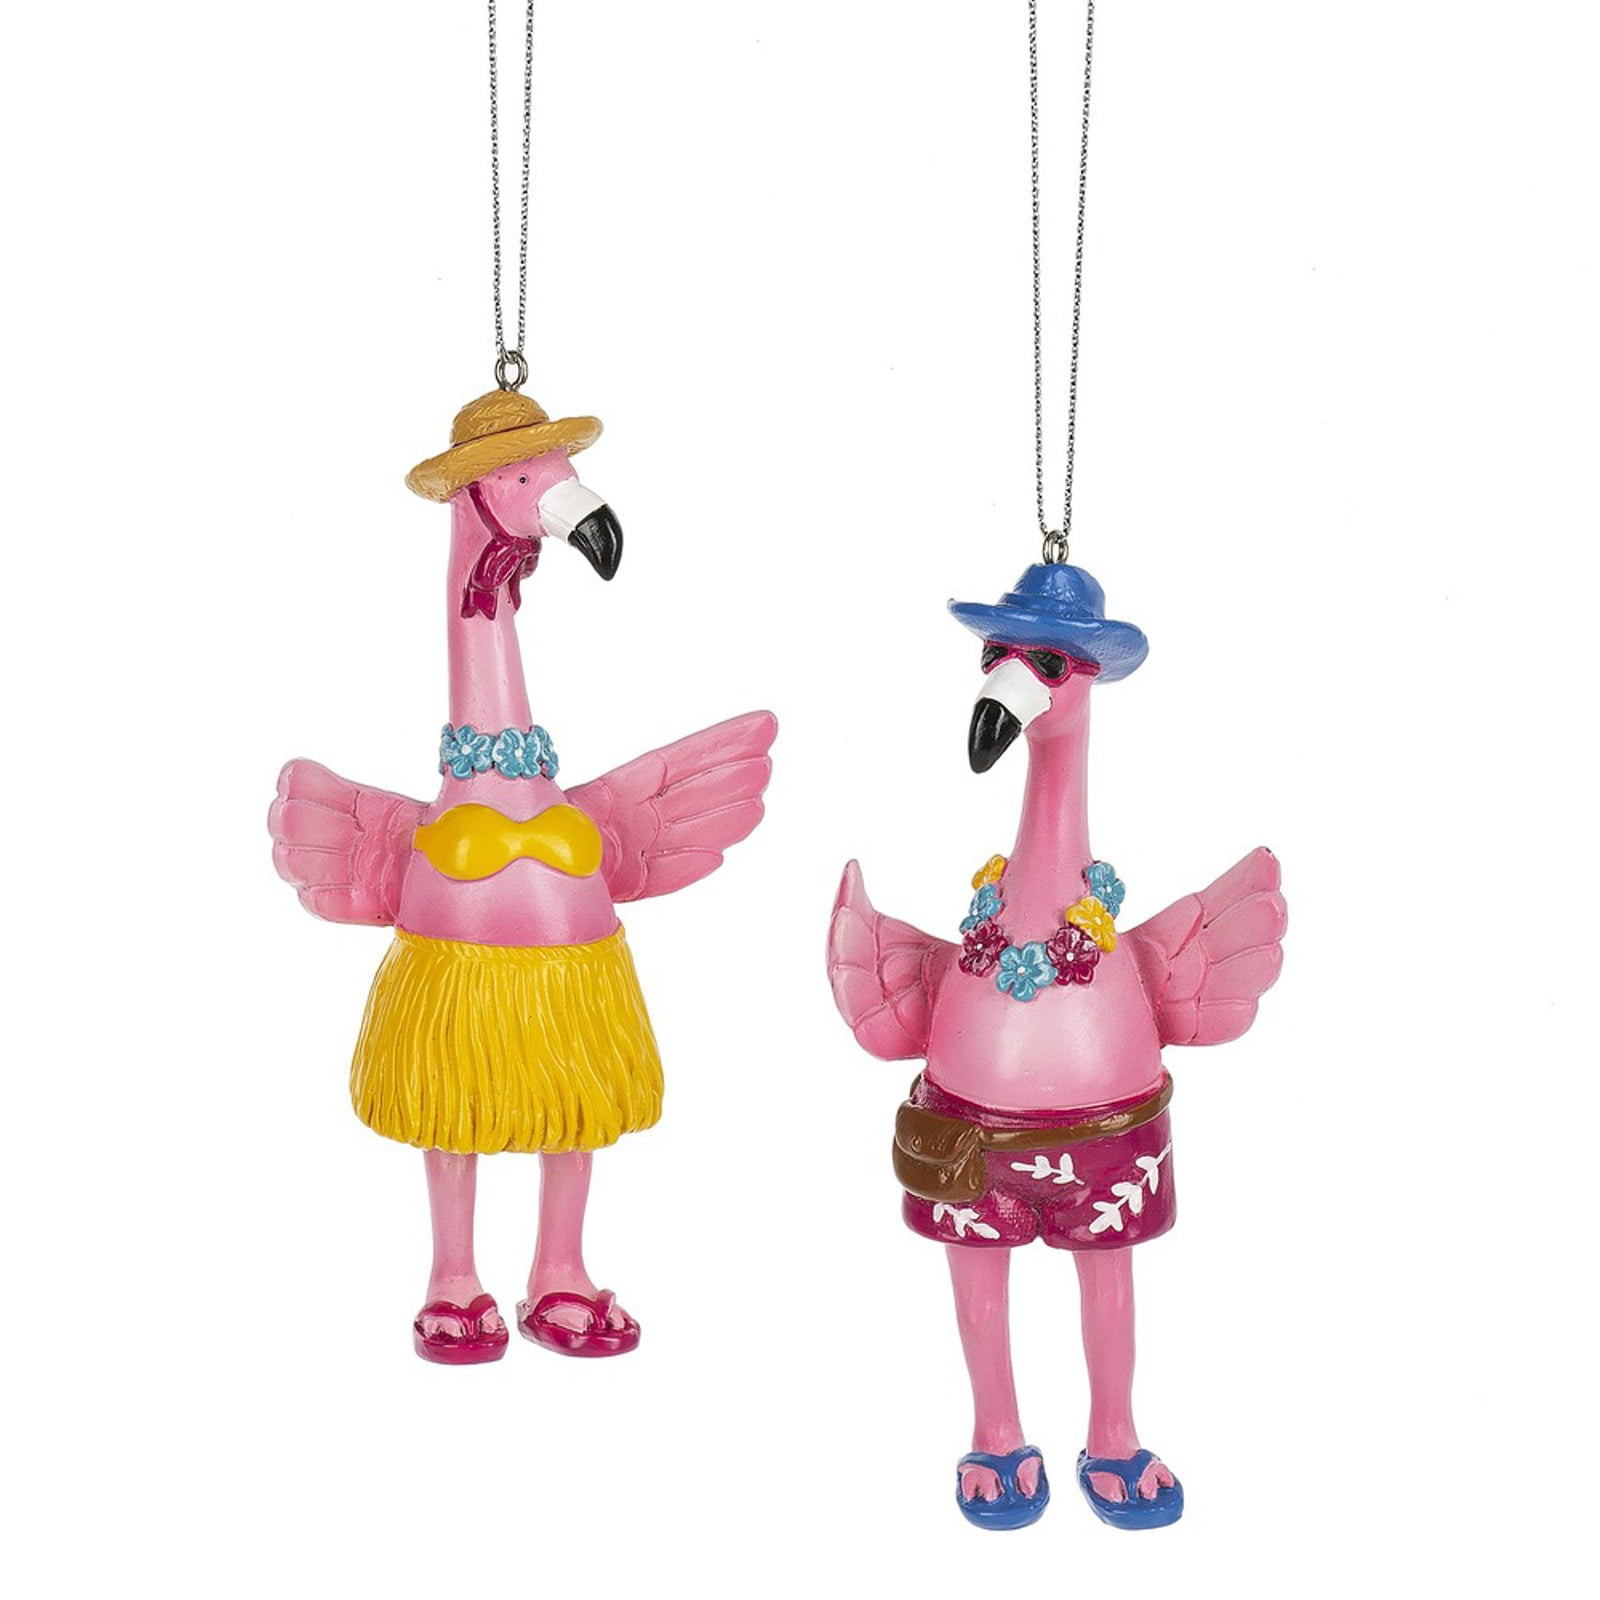 Boy and Girl Flamingos Christmas Holiday Ornaments Set of 2 Resin ...